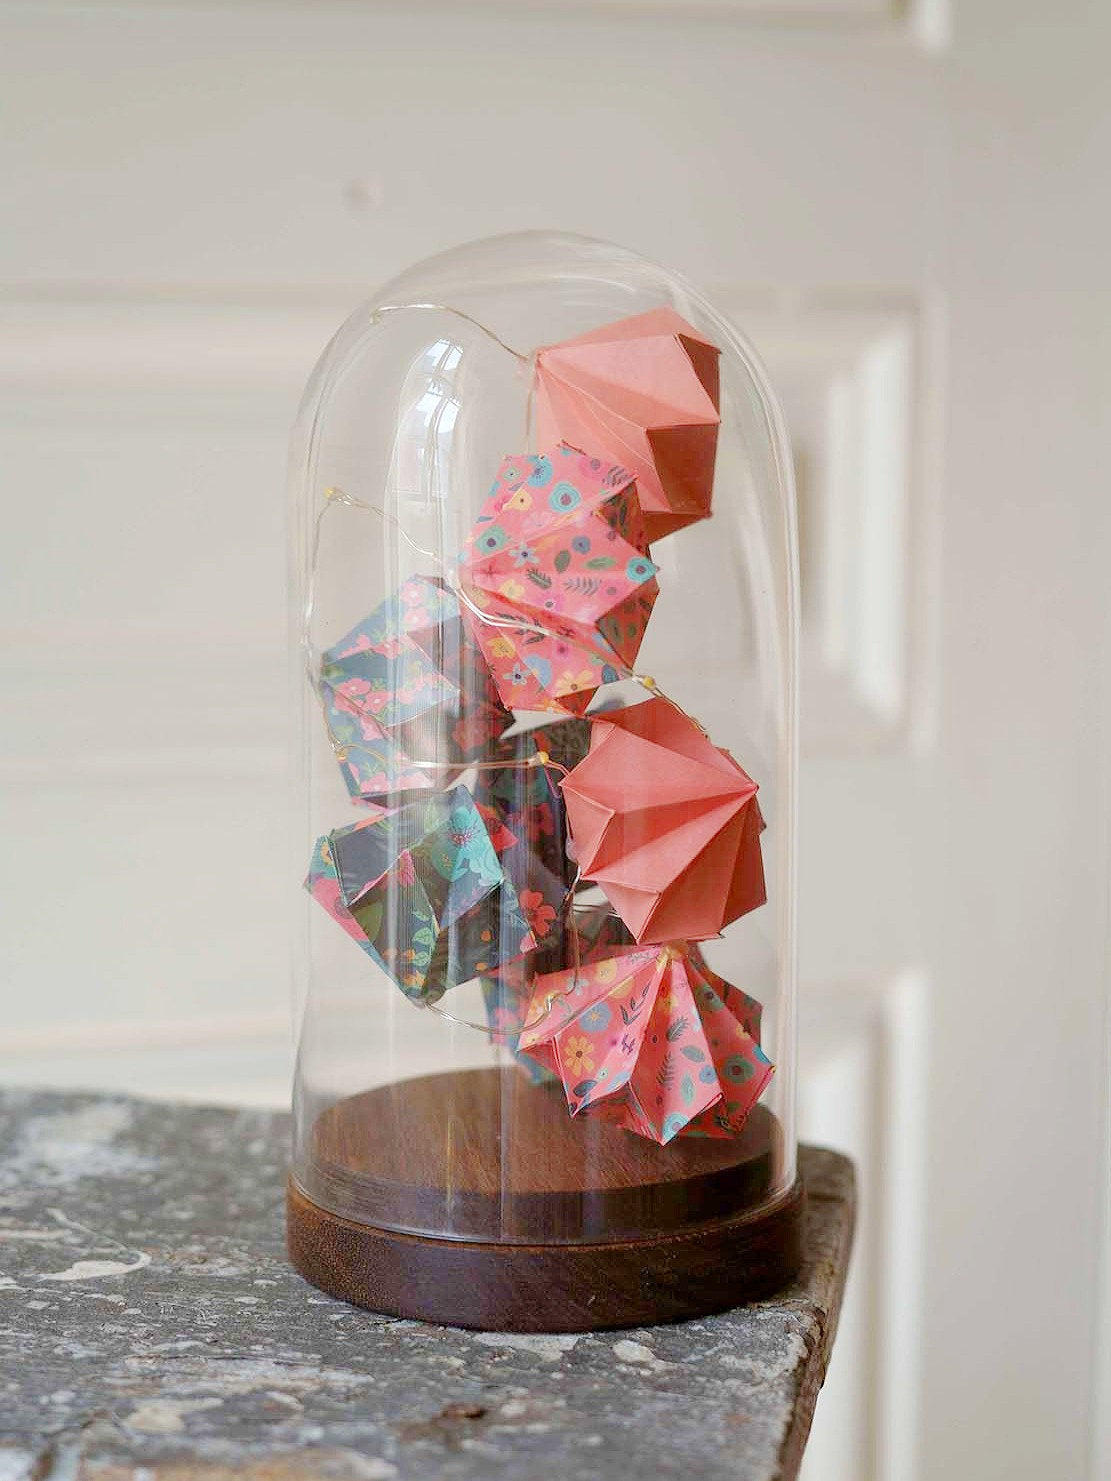 Large glass bell - Light garland of origami diamonds - Terracotta